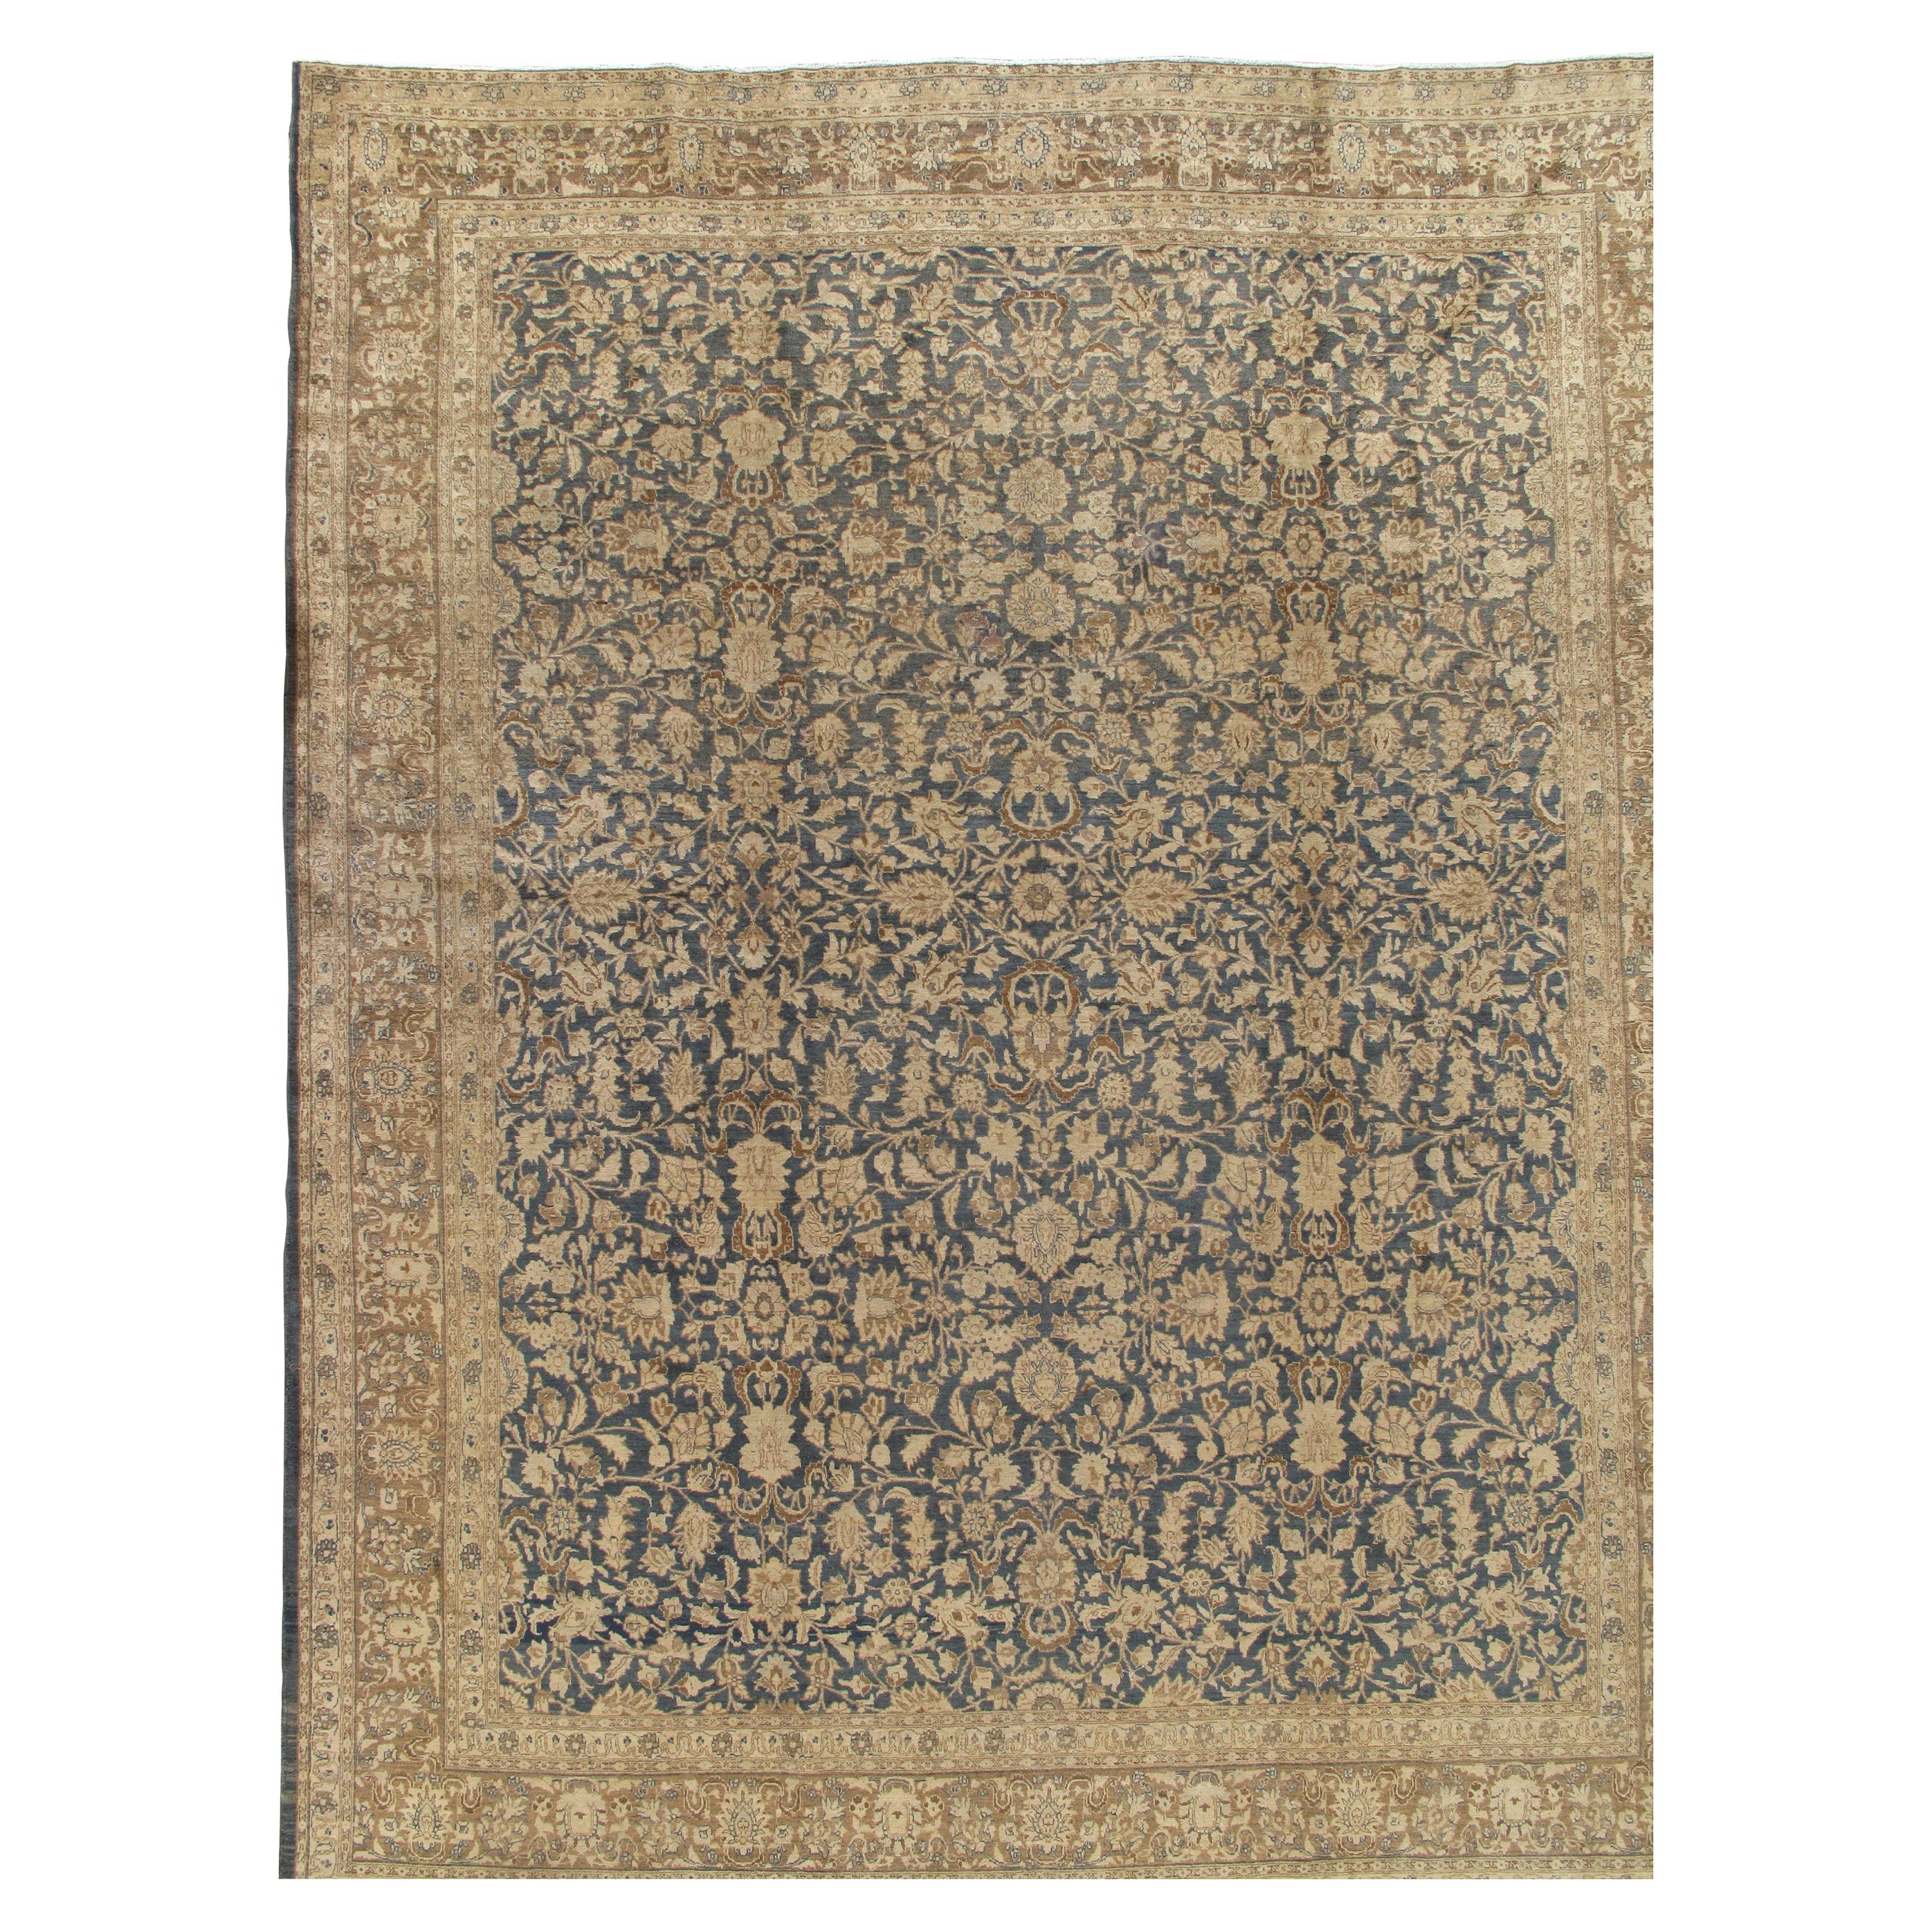 Antique Persian Tabriz Carpet, Handmade Oriental Rug, Beige, Gray/Blue, Taupe